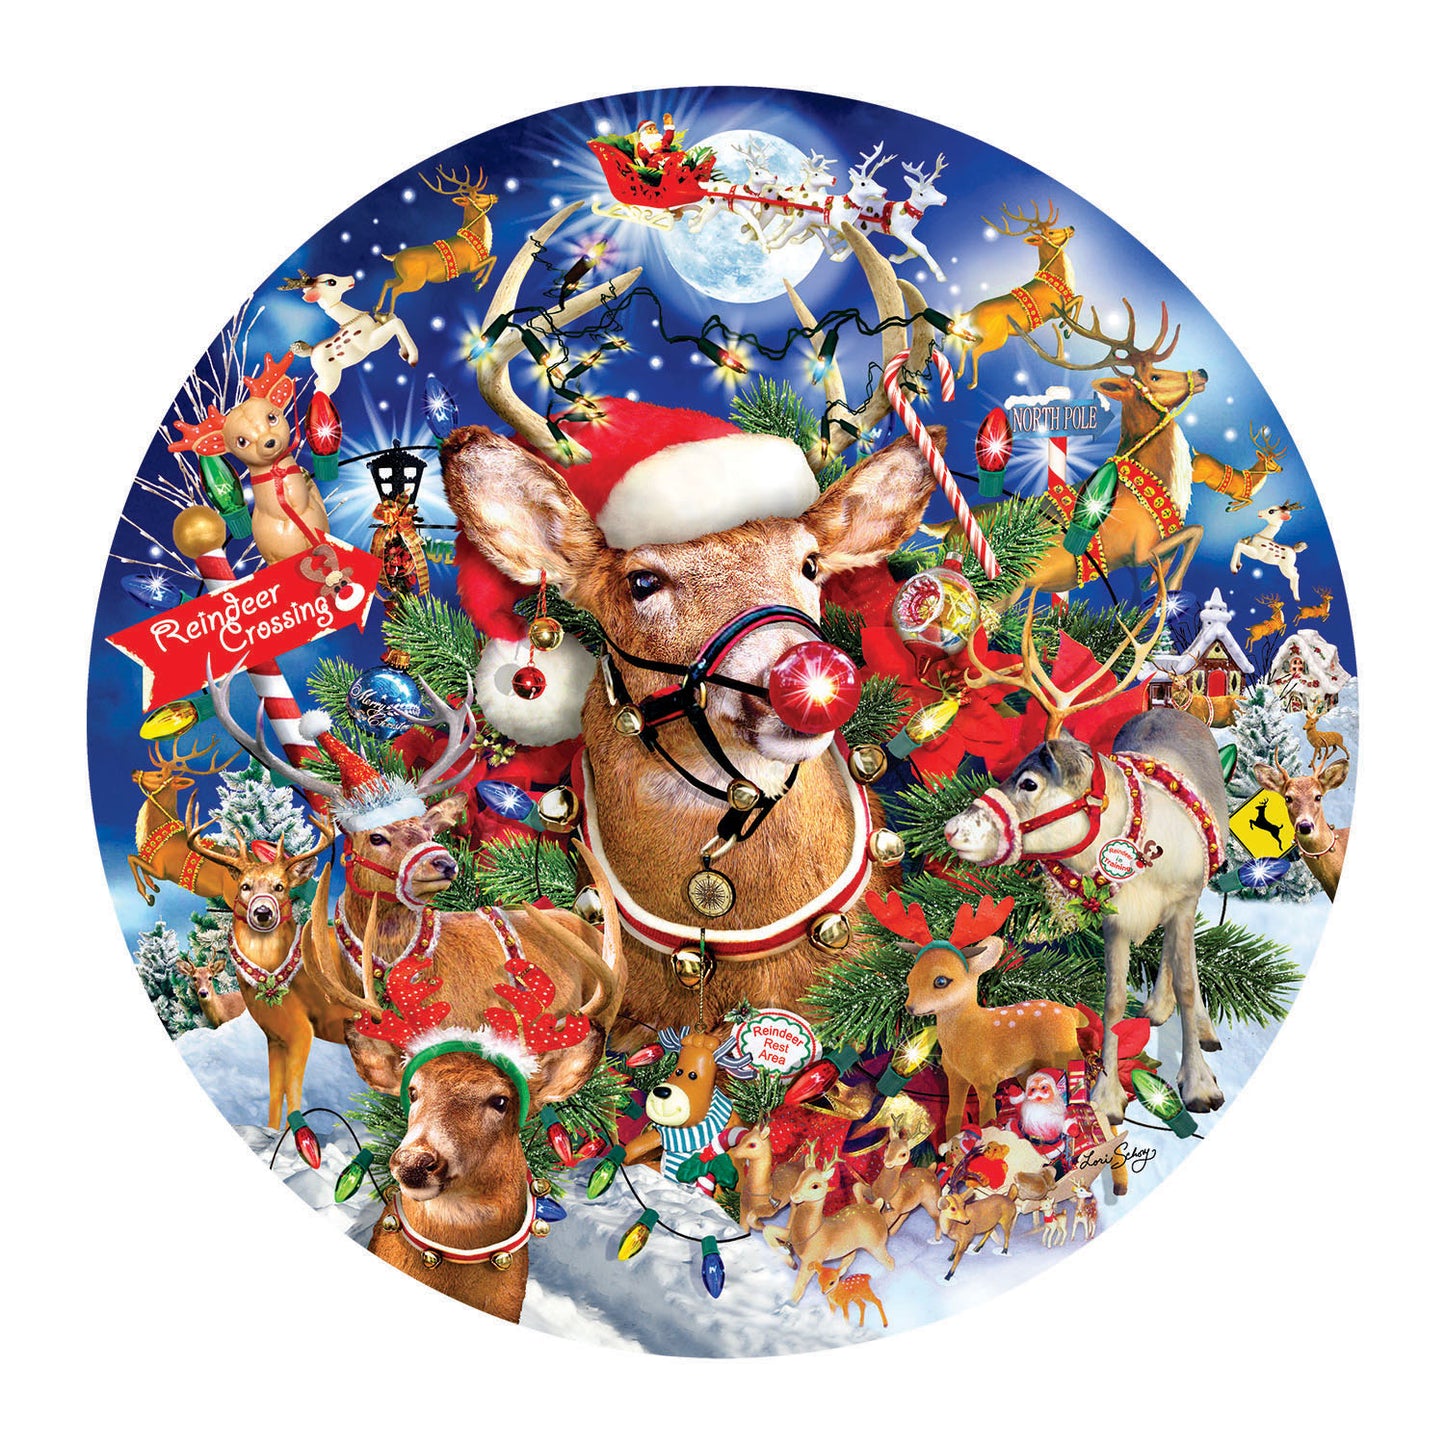 Reindeer Madness - 1000 Piece Jigsaw Puzzle